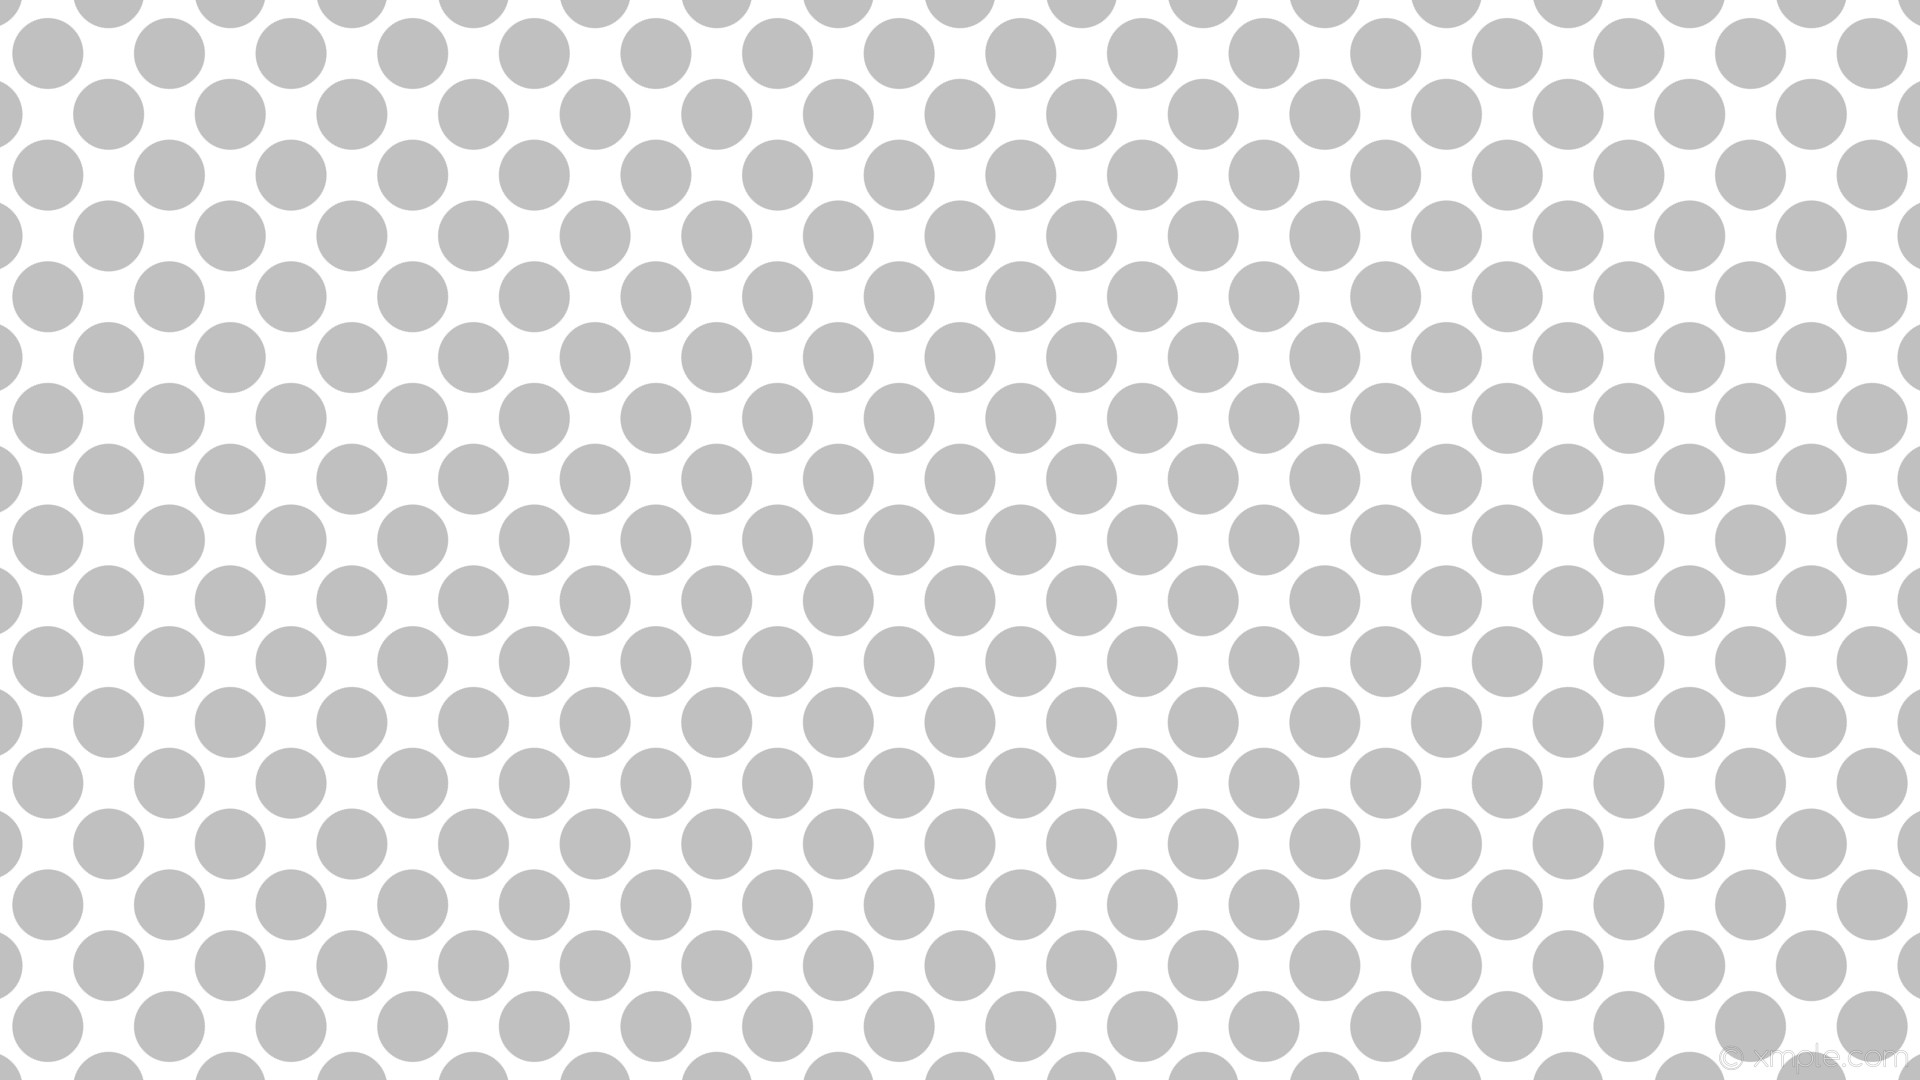 1920x1080 Download Silver Polka Dot Wallpaper Gallery